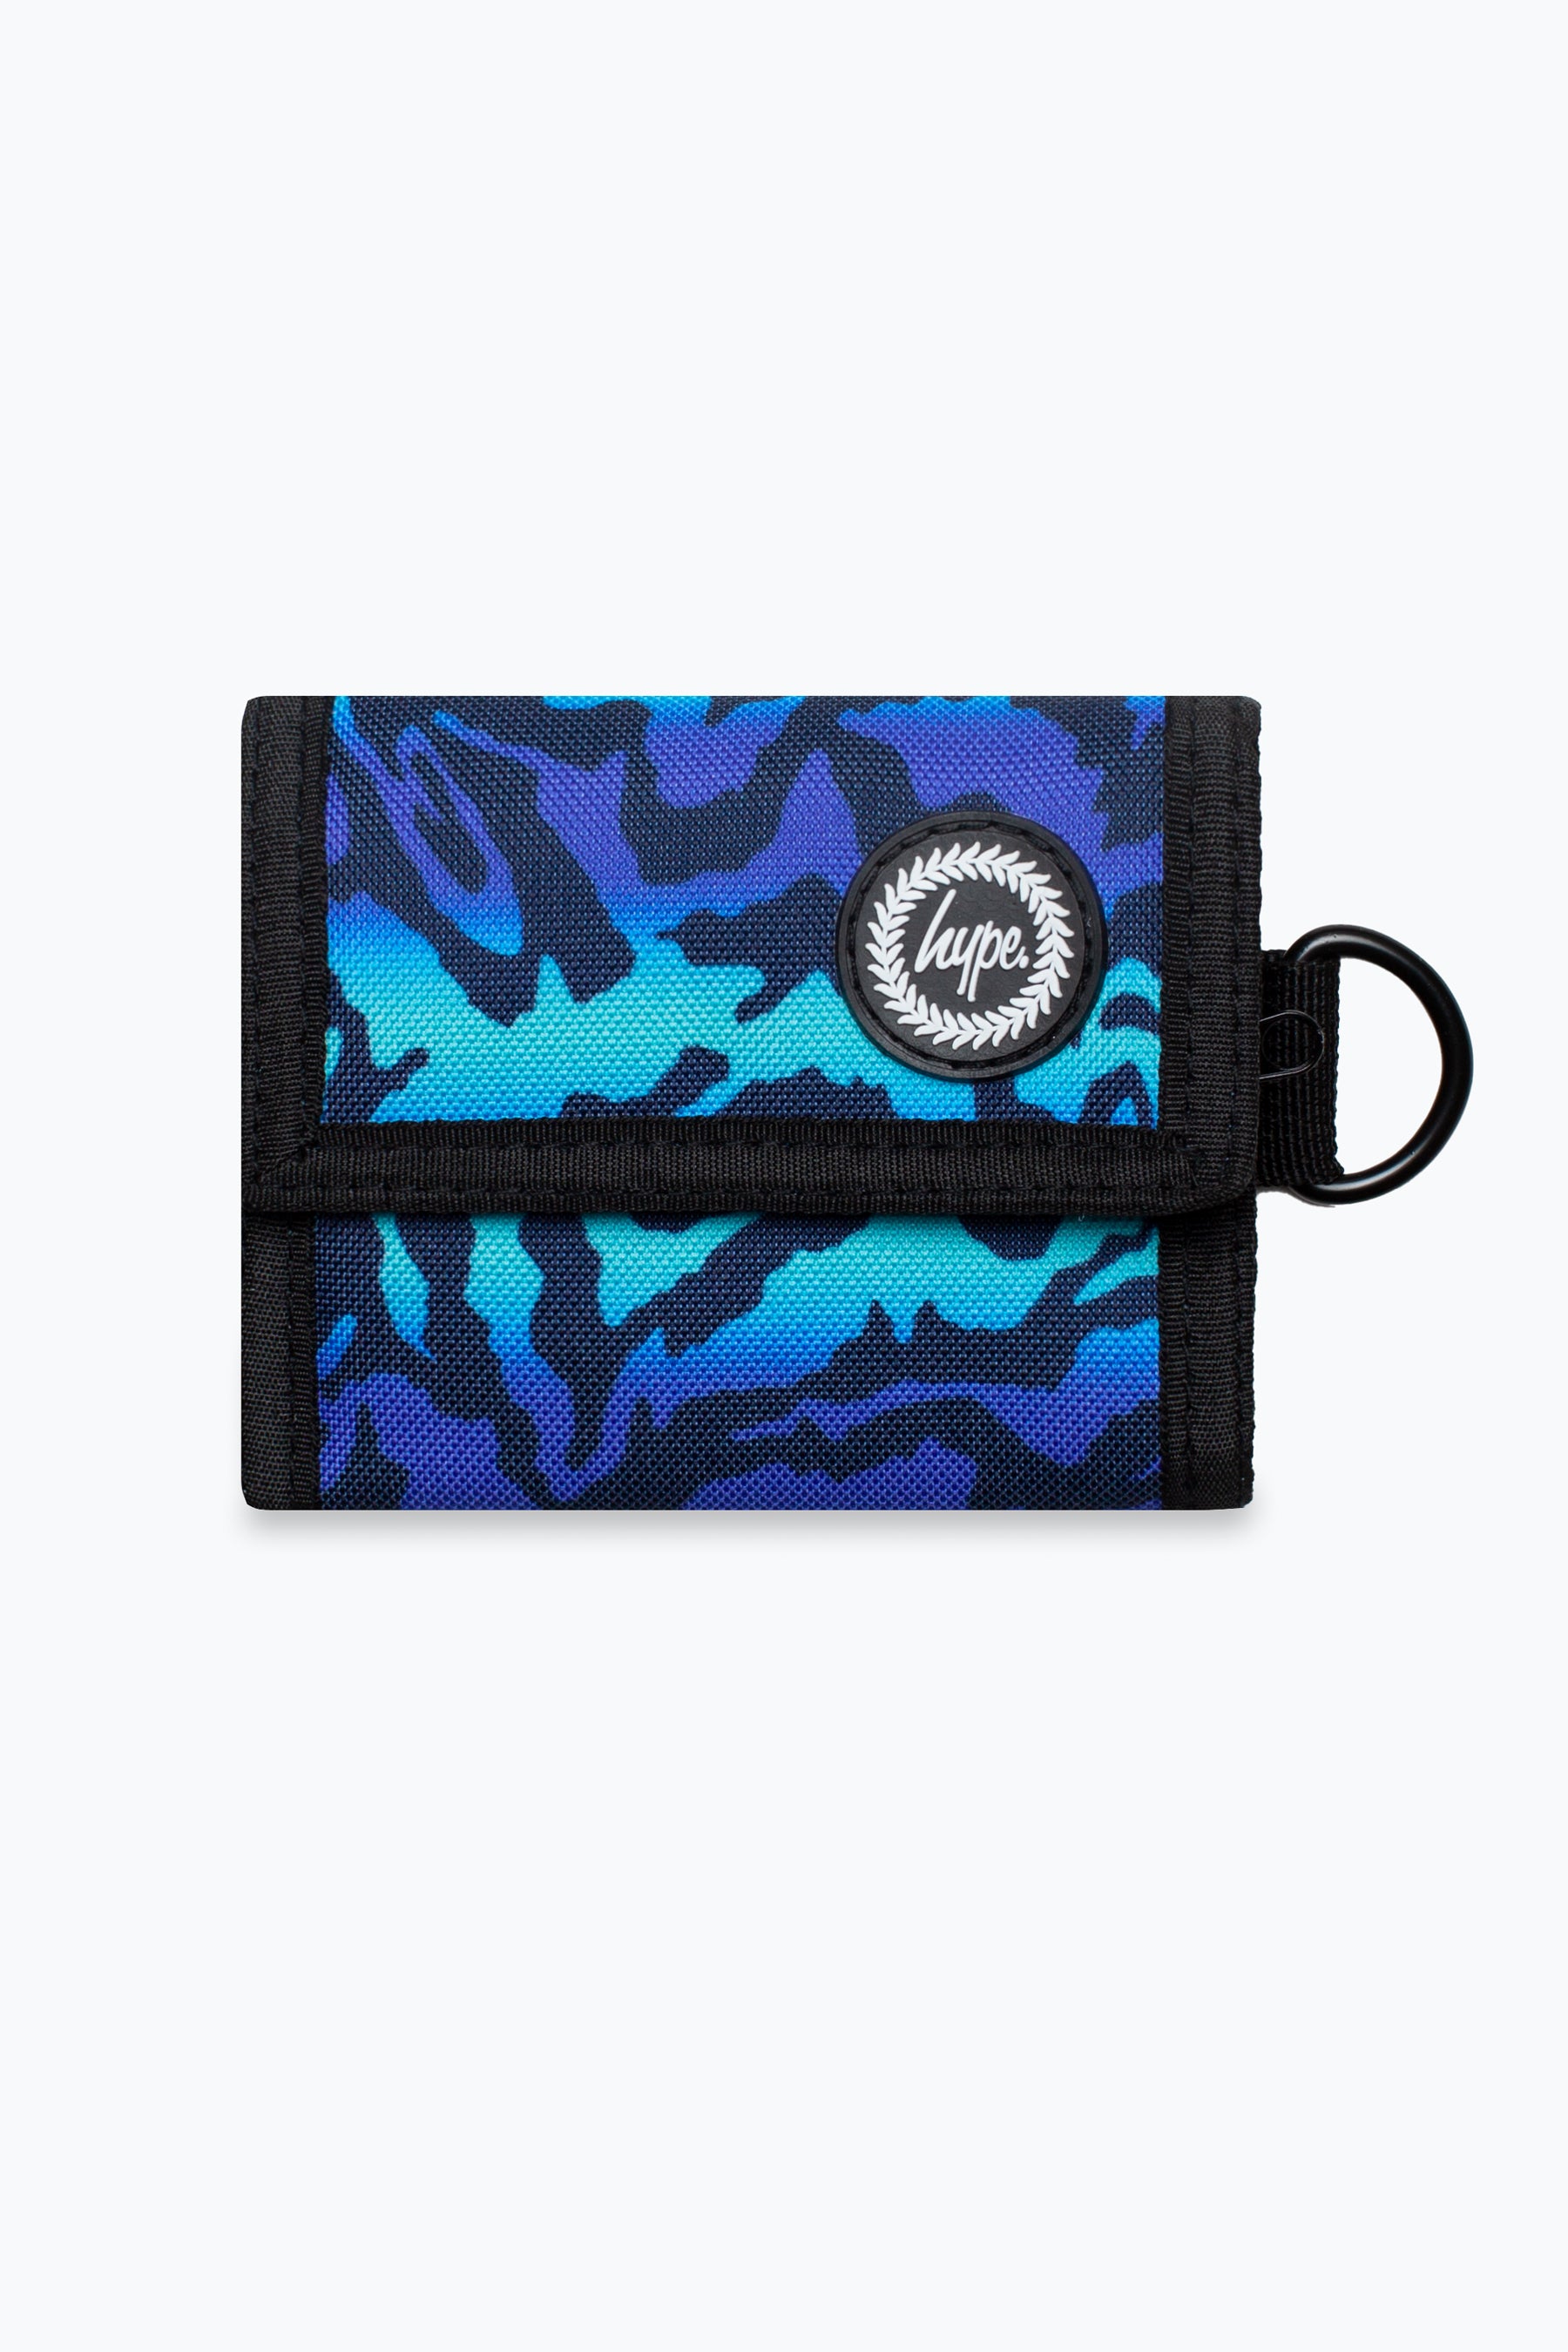 hype blue & teal gradient wallet